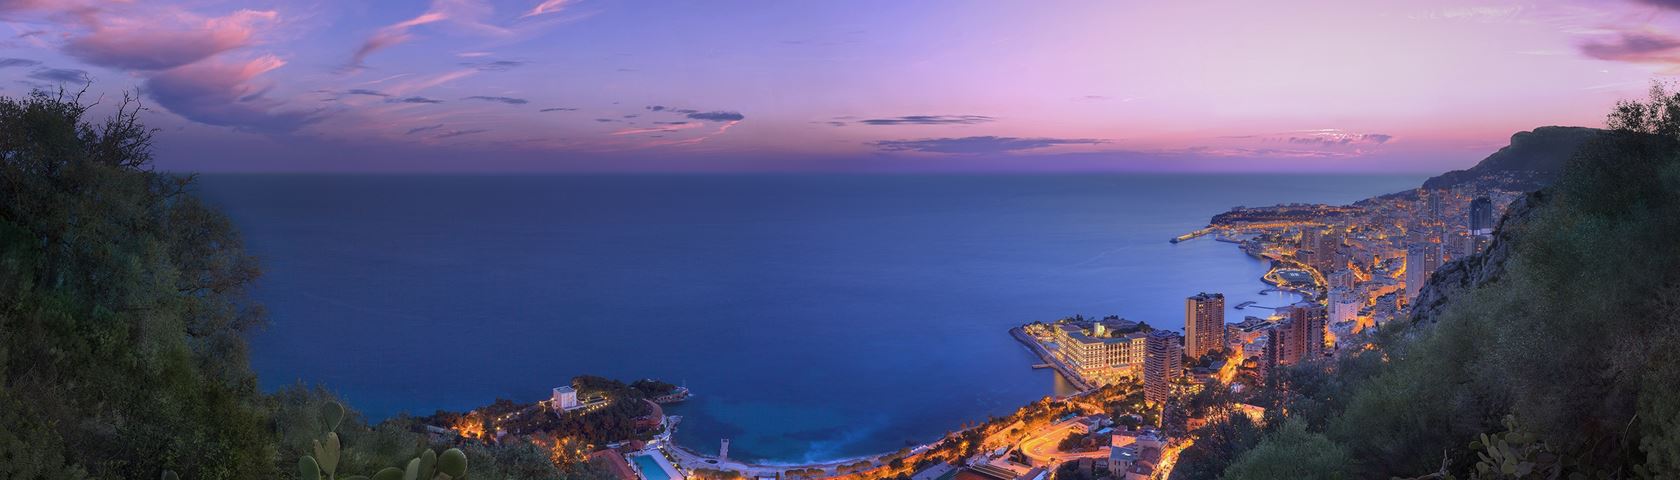 Monaco Purple Clouds Sunset